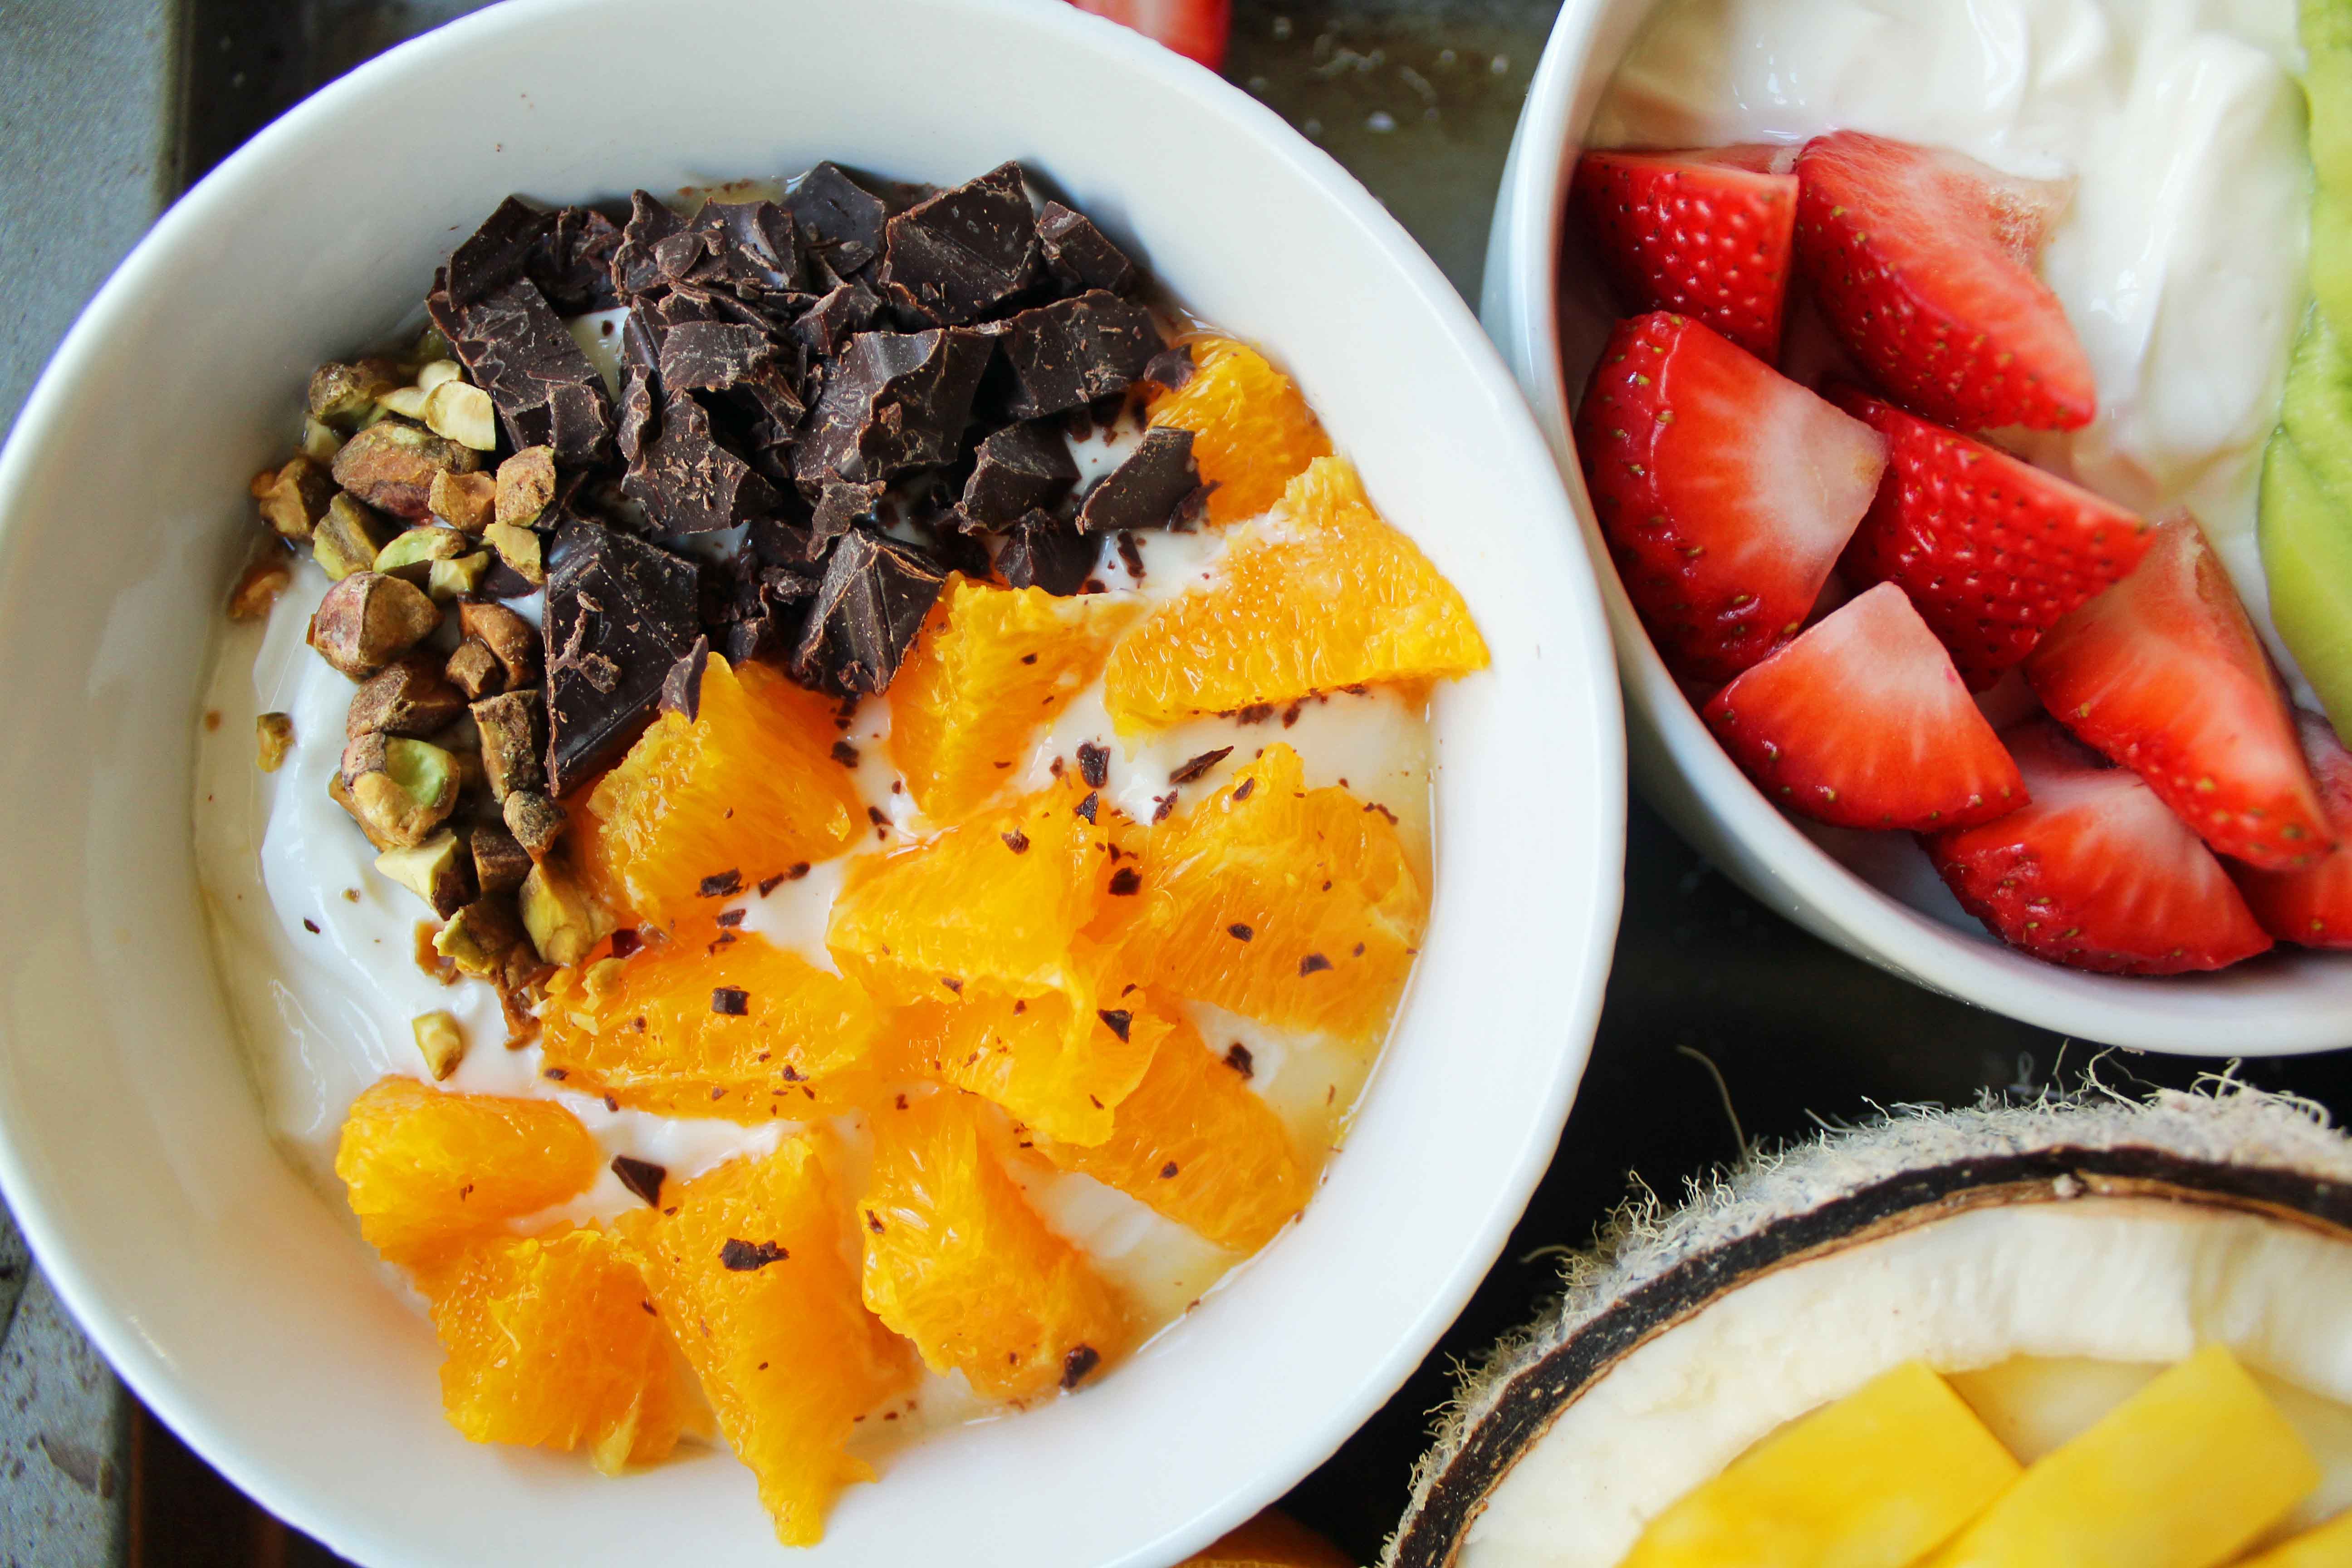 Yogurt Bowl Ideas for a Healthy Breakfast - Buttered Side Up